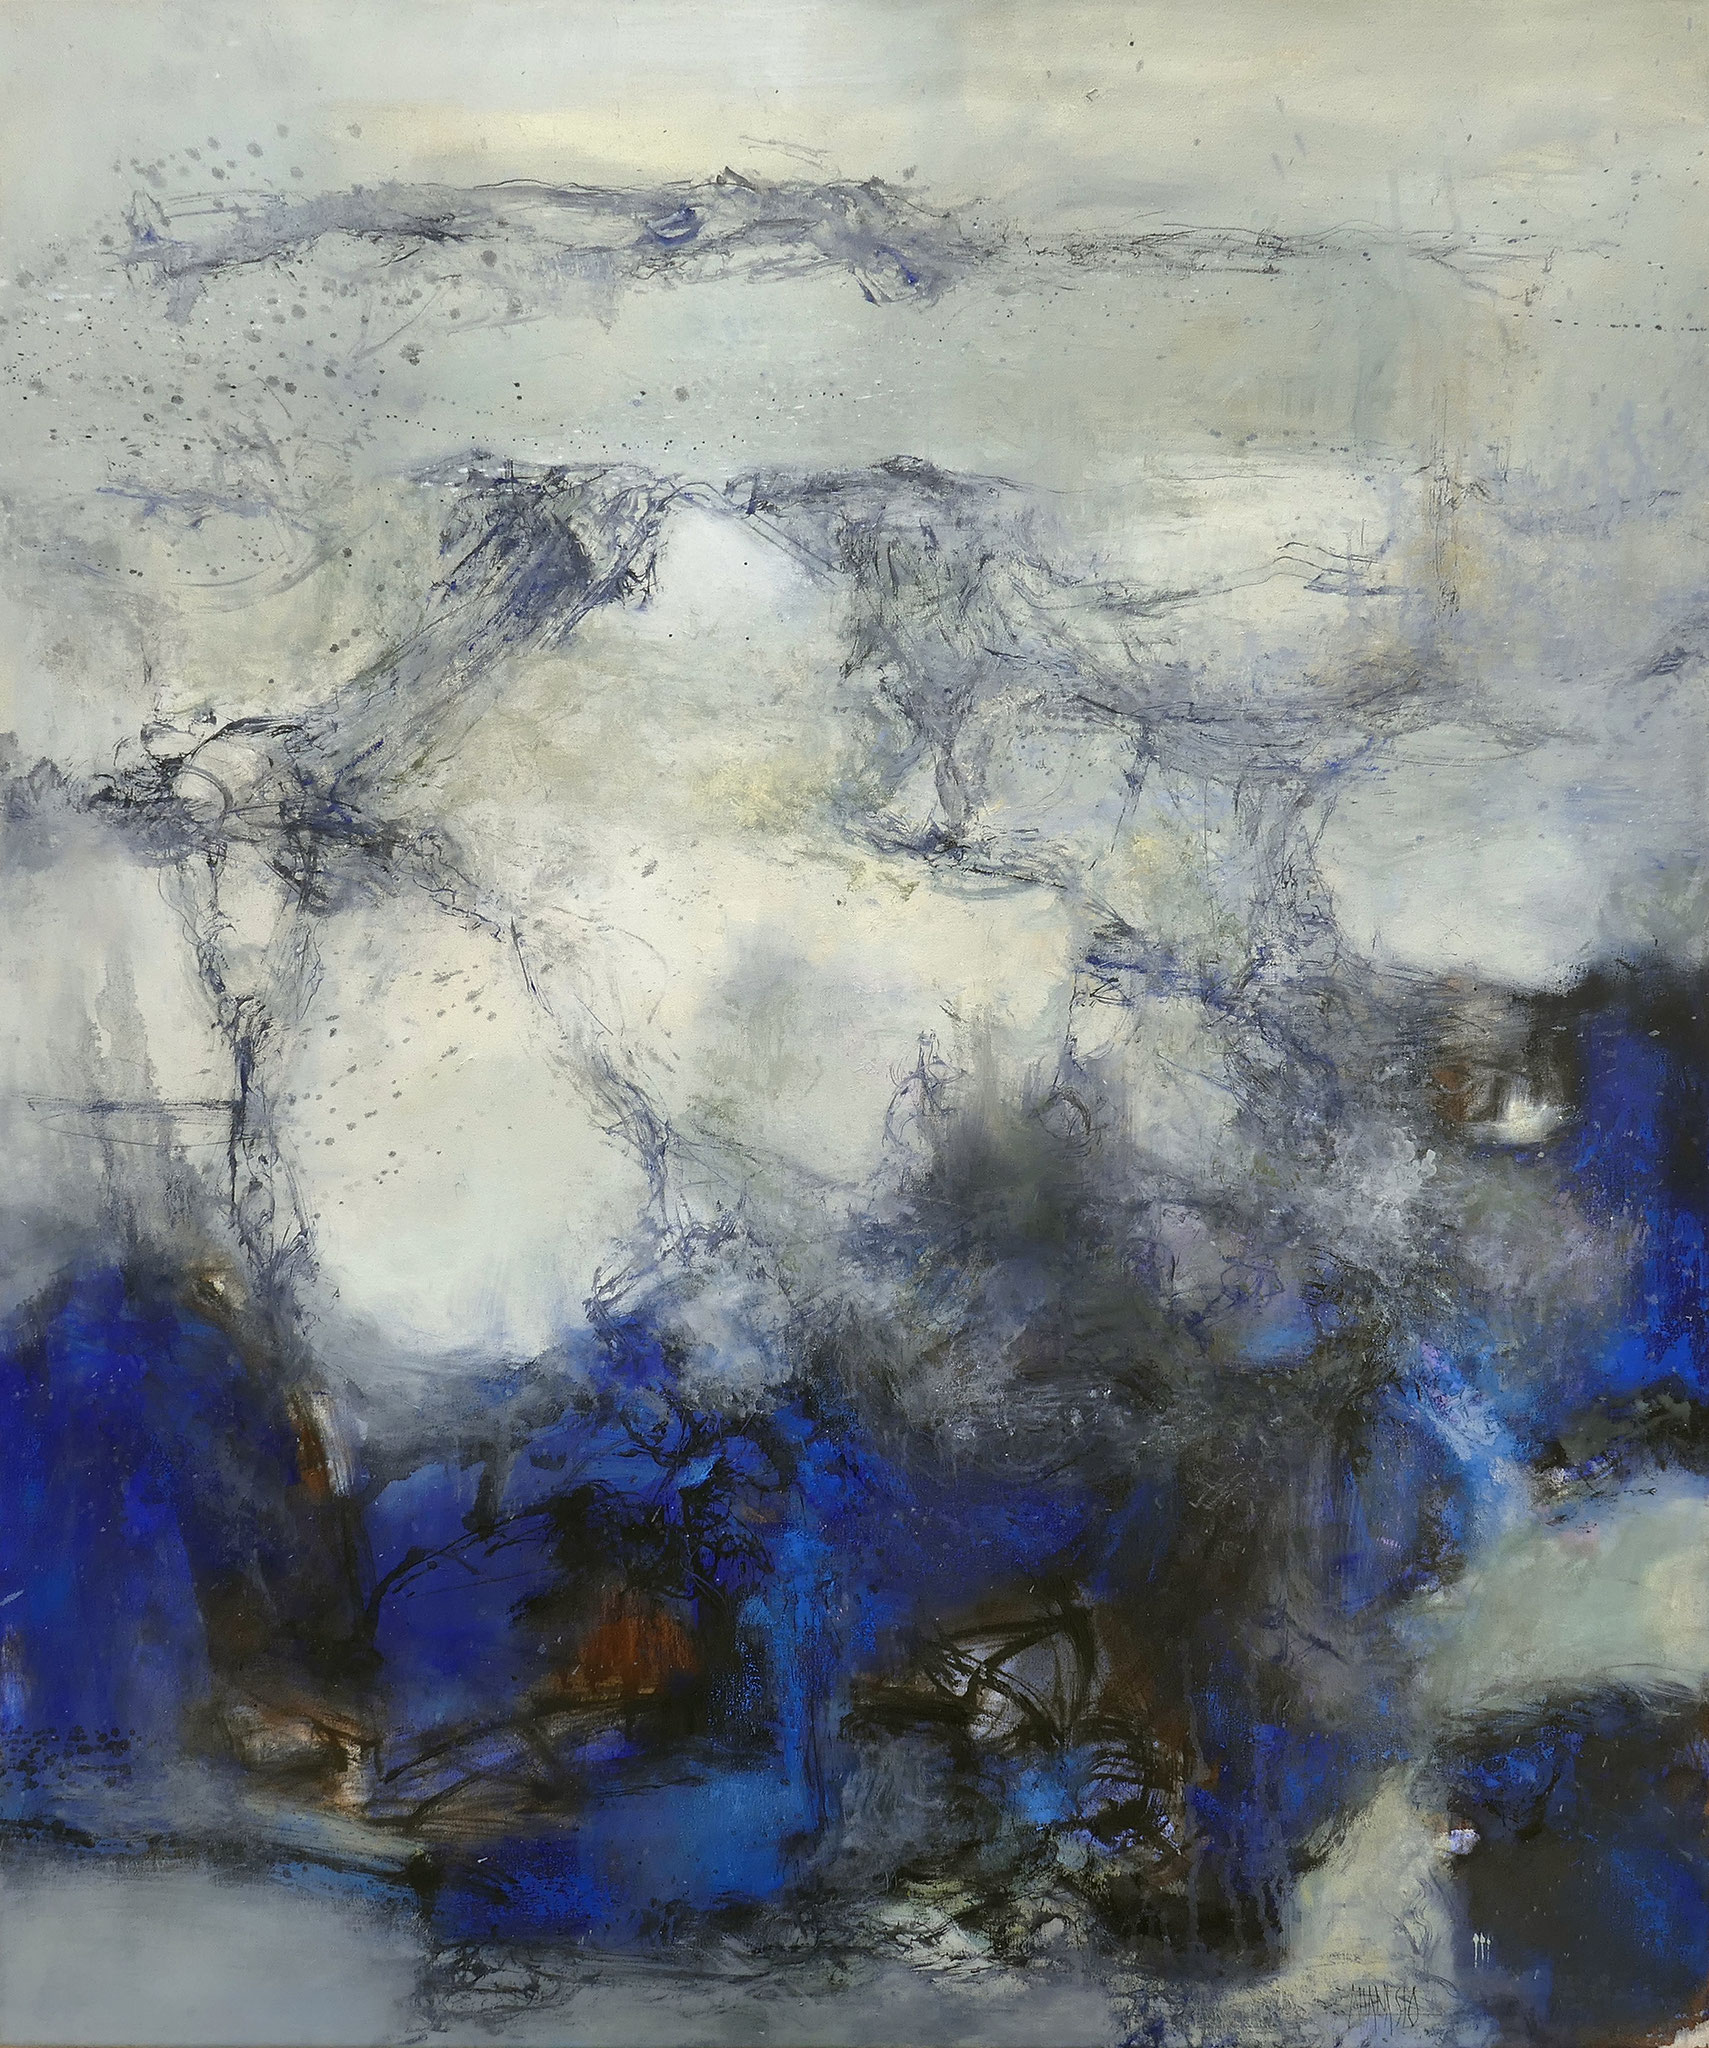 Raymond ATTANASIO, "21-05-03", Huile sur toile, 100x81 cm, 2018